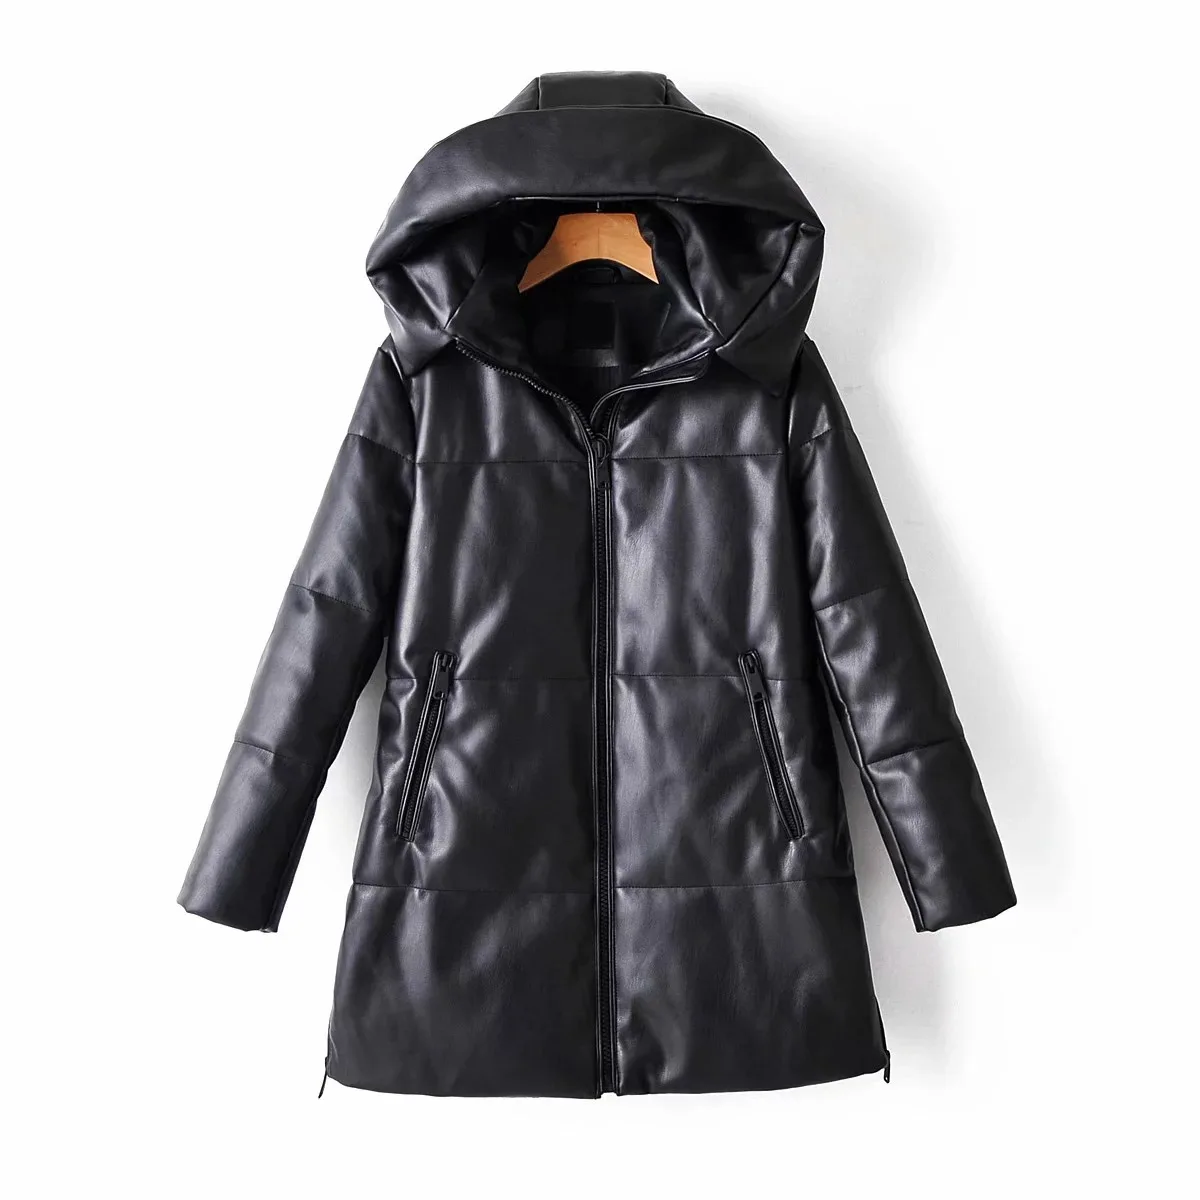 2021 Women Jacket New Ladies Casual  Black PU Leather Zipper Coats Fashion Autumn Warm  Winter Thick Warm Portable Outwear